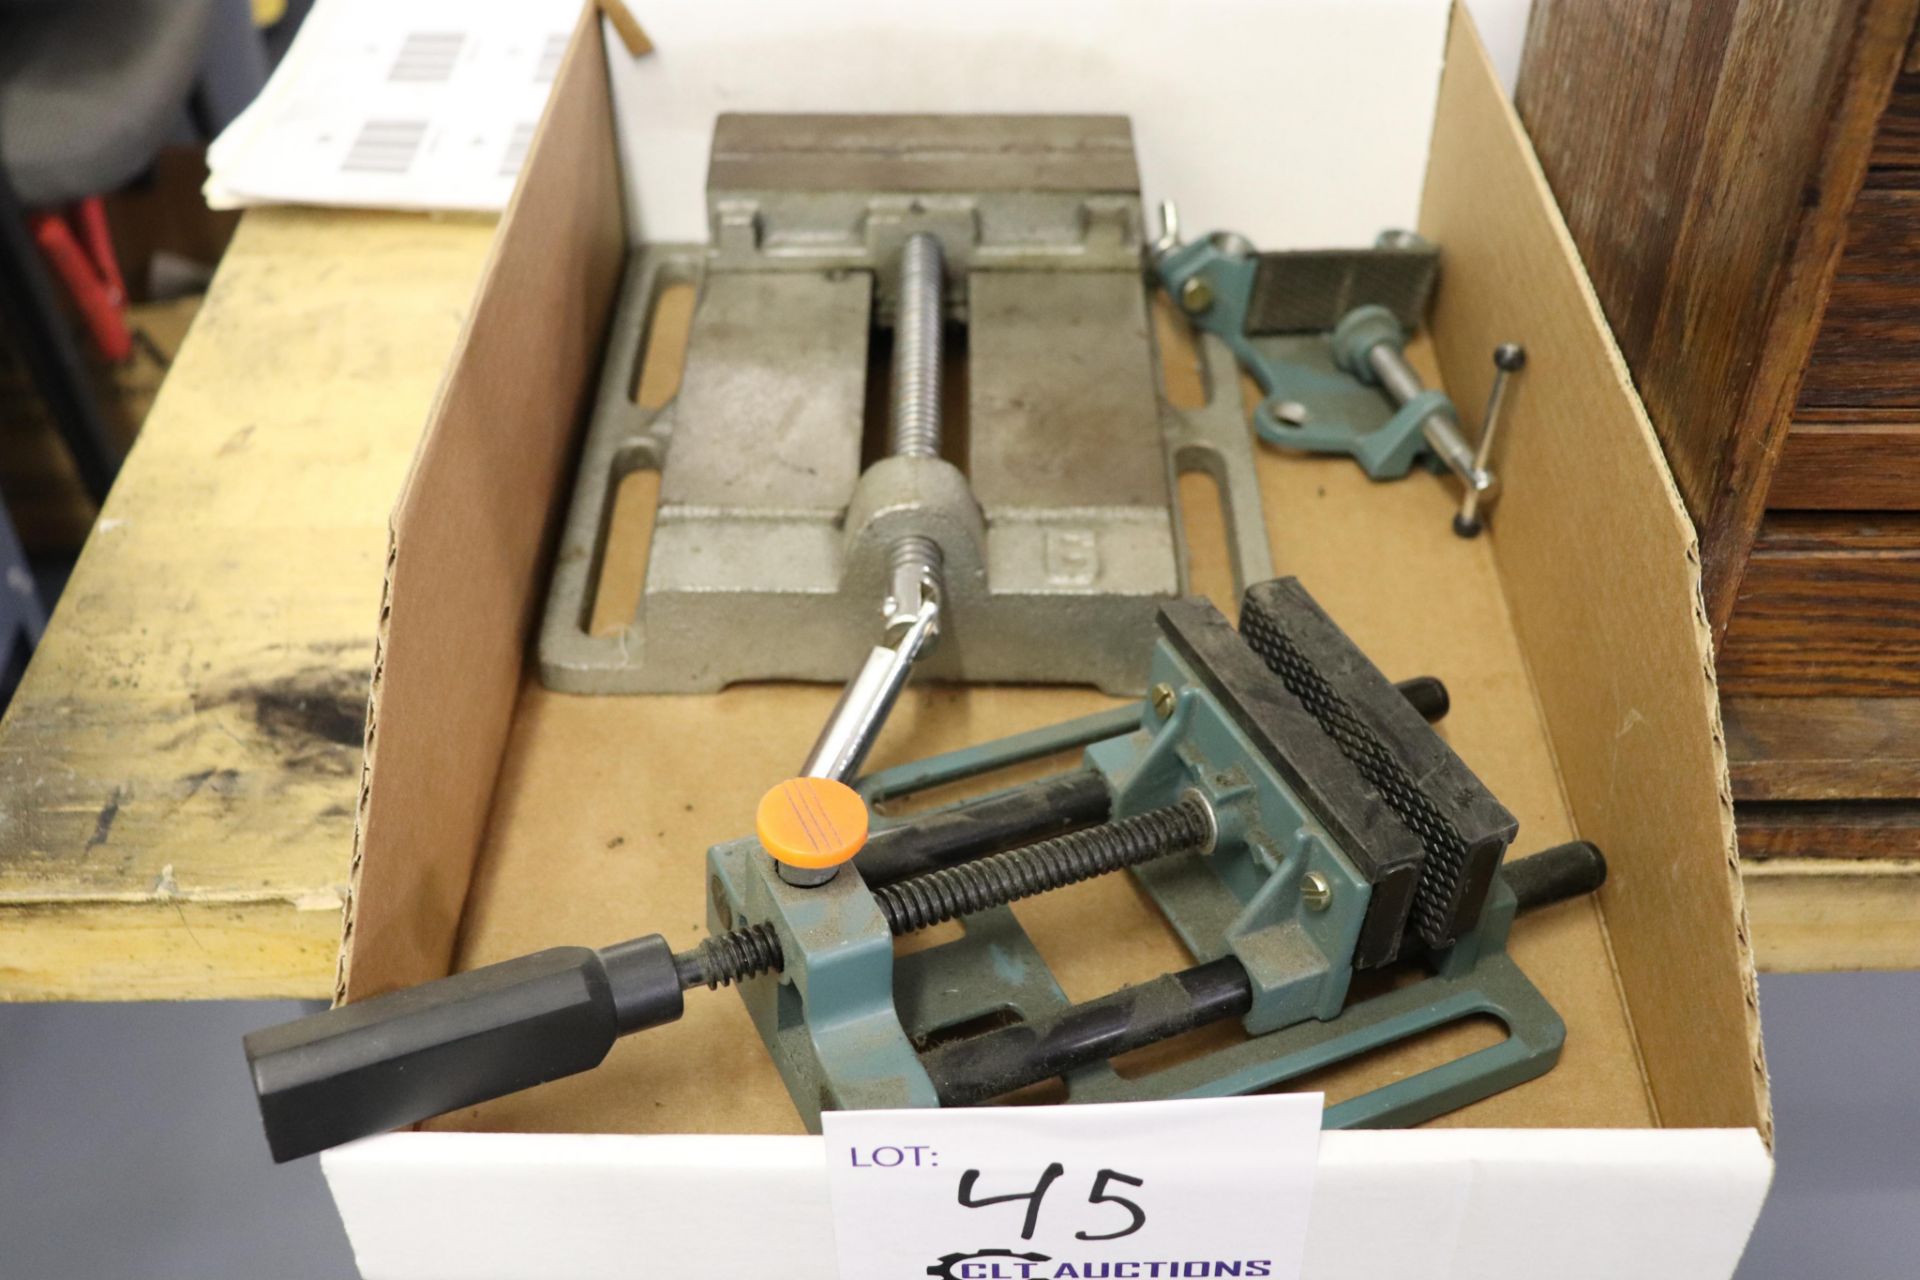 6" drill press and plastic vise